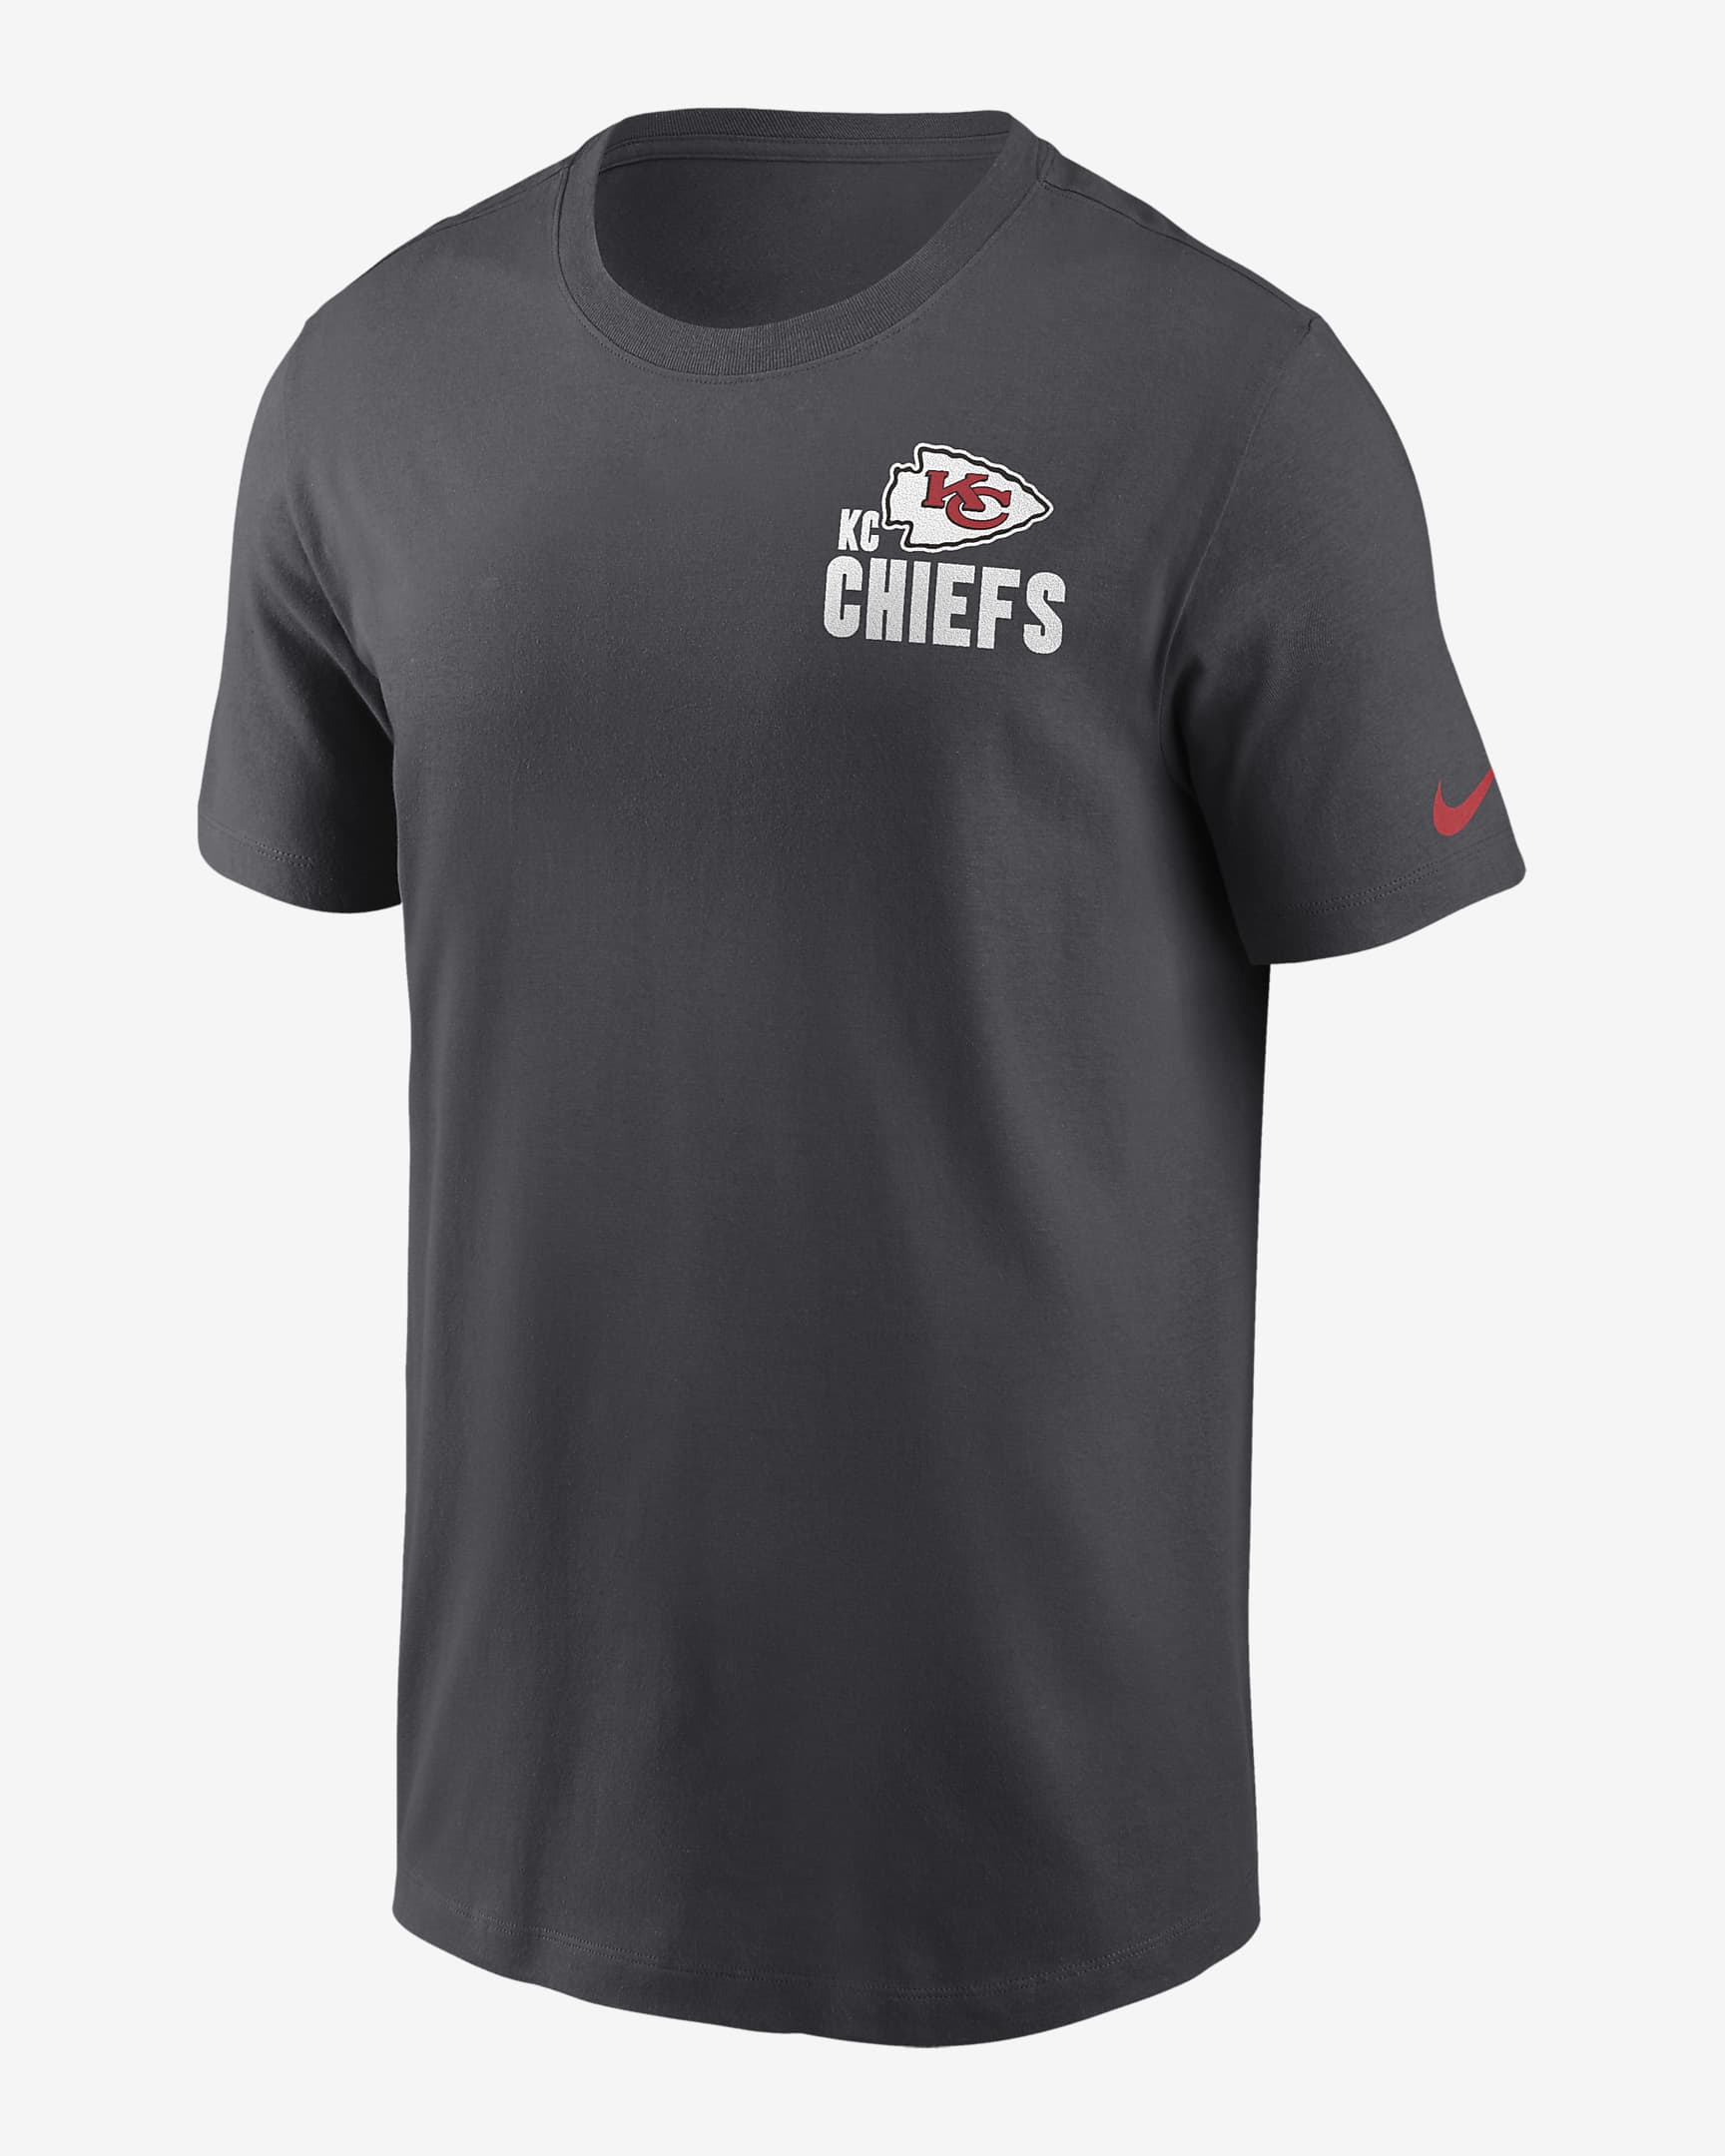 Playera Nike de la NFL para hombre Kansas City Chiefs Blitz Team ...